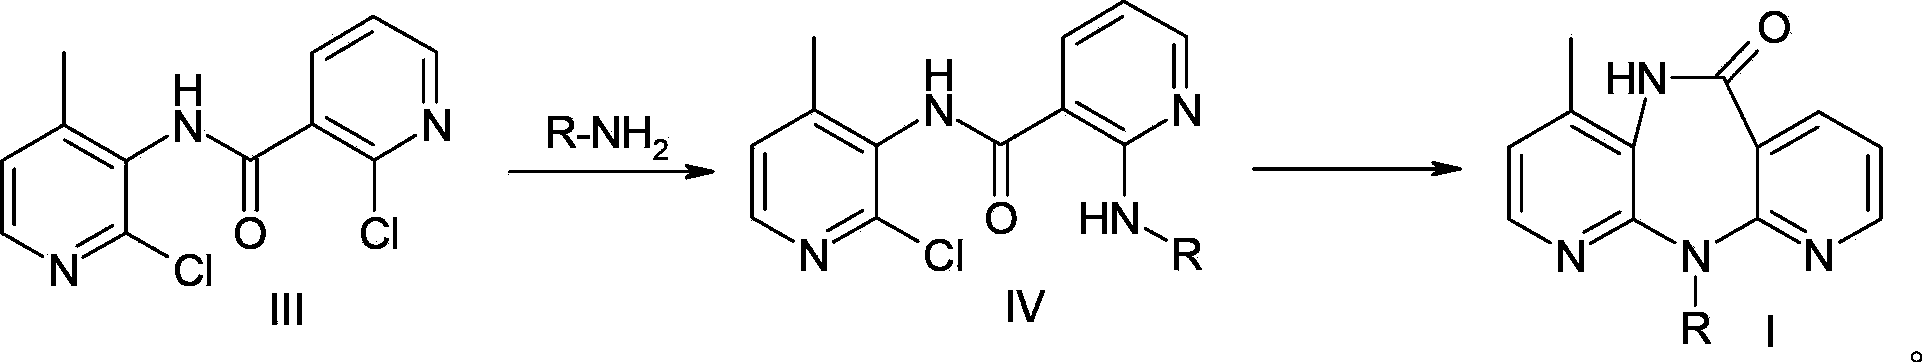 Preparation method for 5,11-dihydro-6H-bispyridino-[3,2-b:2',3'-e][1,4]diazepines